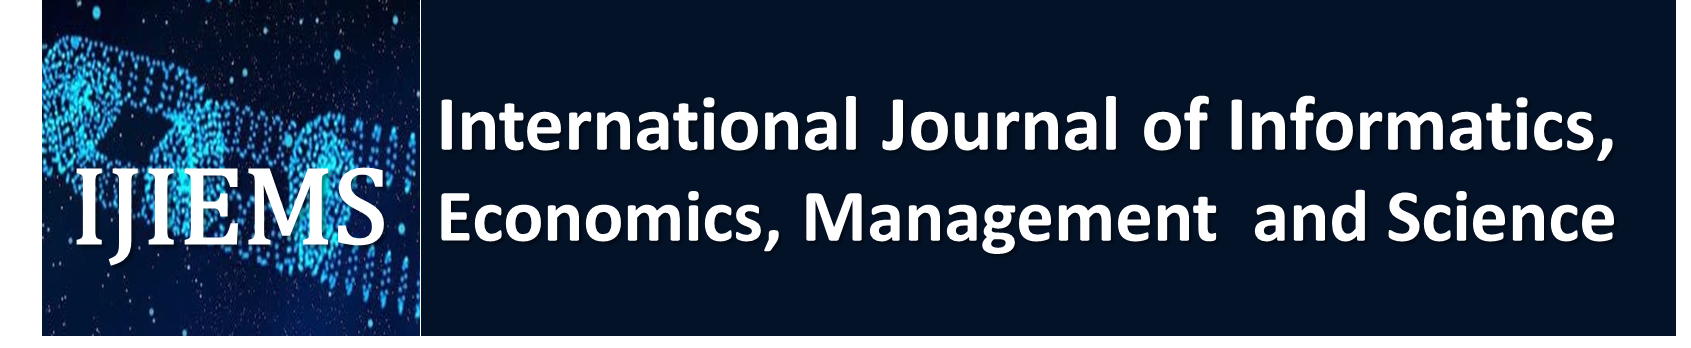 Interntional Journal of Informatics, Economics, Management and Science (IJIEMS)